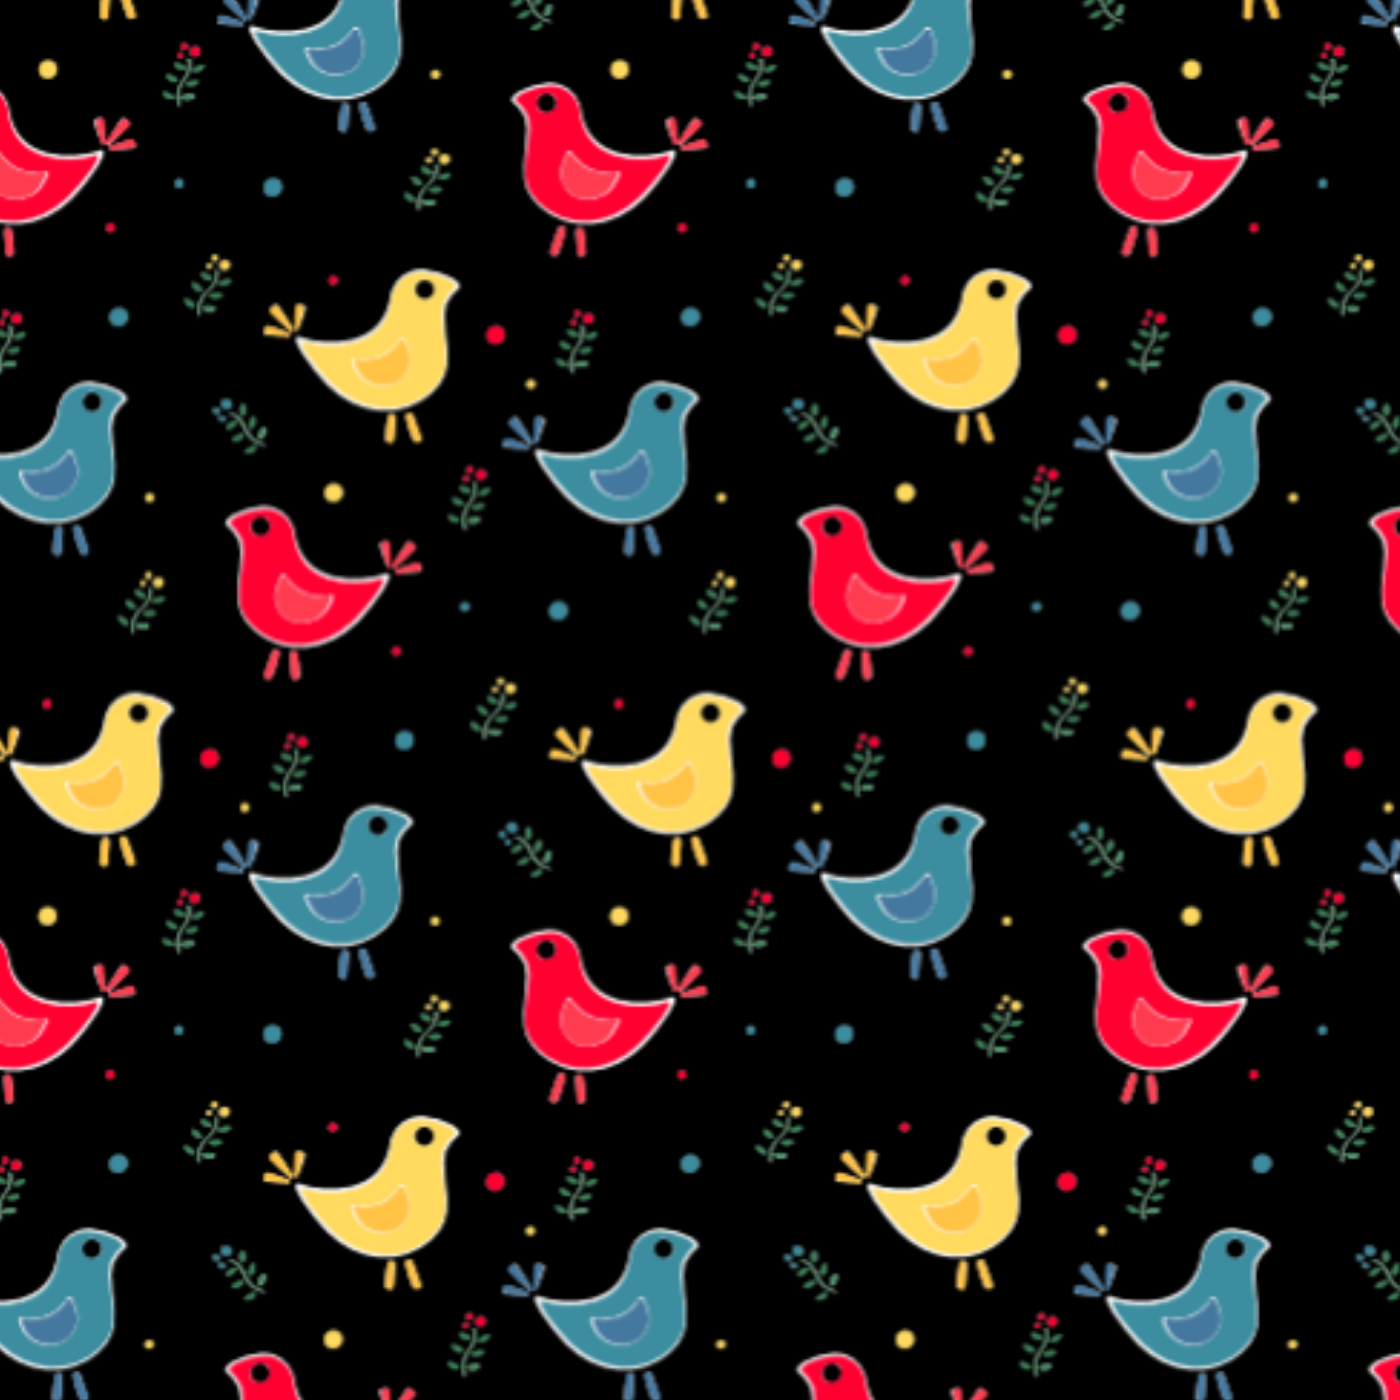 Chirp-Cute-Birds-Partridge-Family-Inspired-Kitsch-Mod-Vintage-Inspired-RainbowsAndFairies.com.au-CHIRP_ORG-01